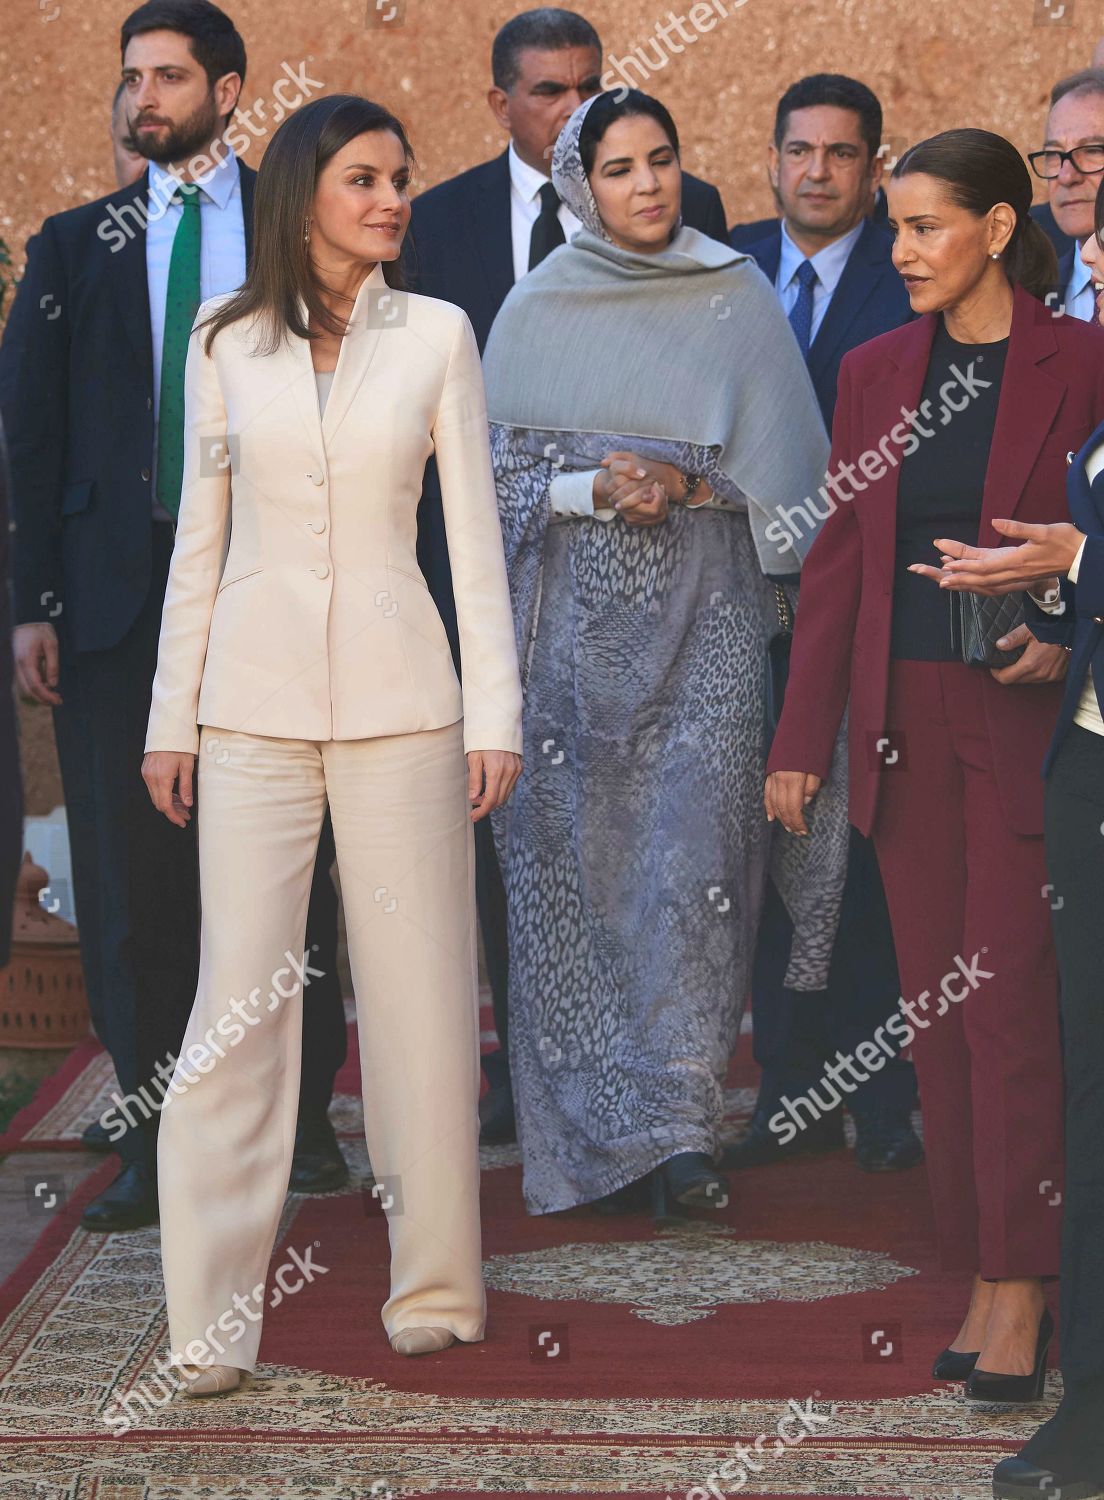 spanish-royals-visit-morocco-shutterstock-editorial-10106900l.jpg